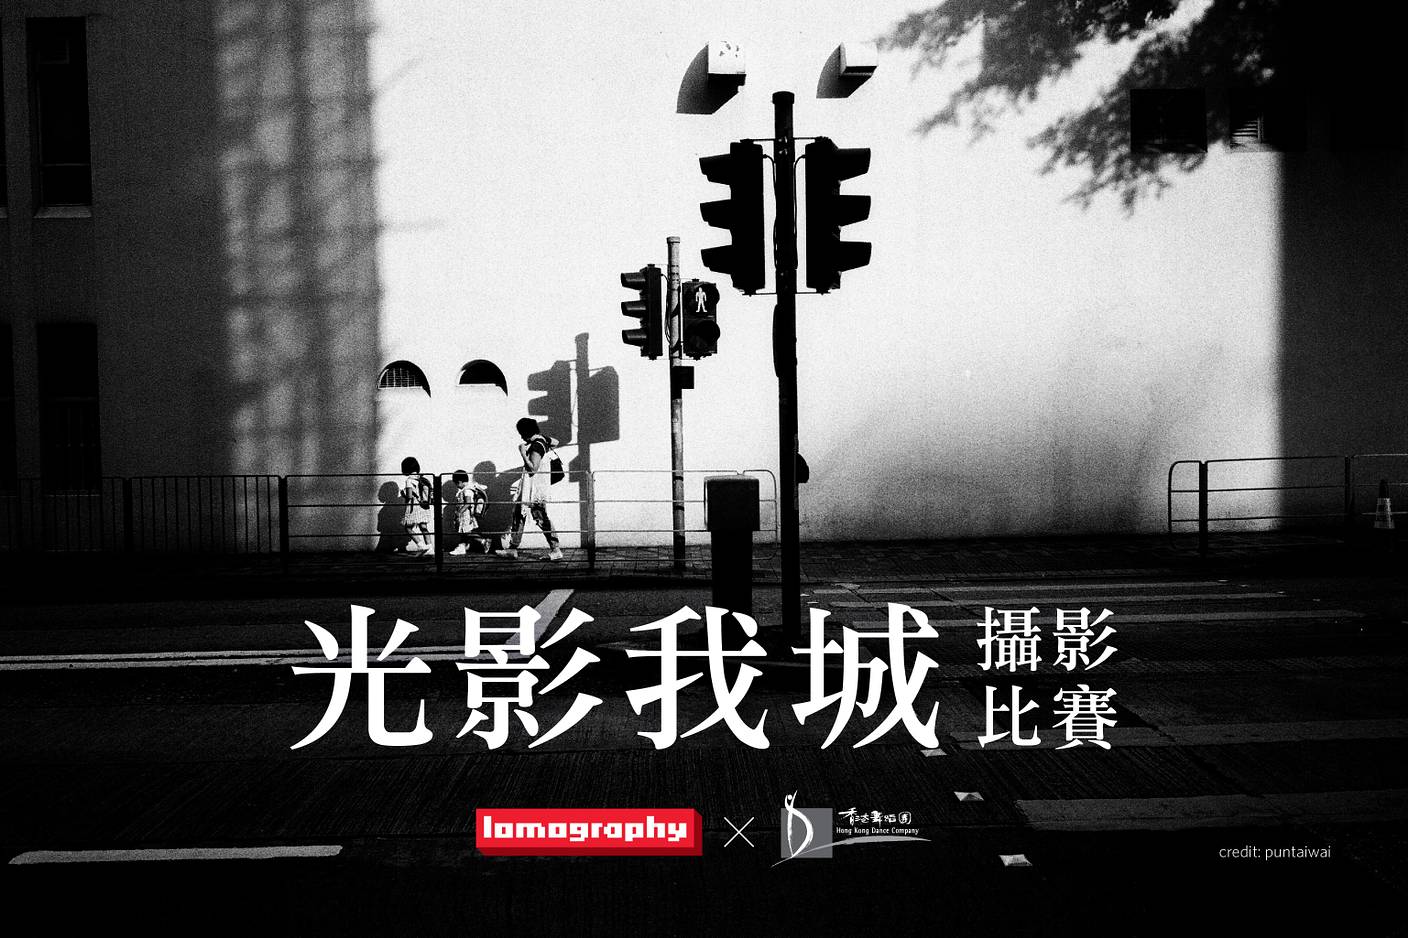 Lomography X Hong Kong Dance Company - Shadows of the City (Prizes Limited to Hong Kong)